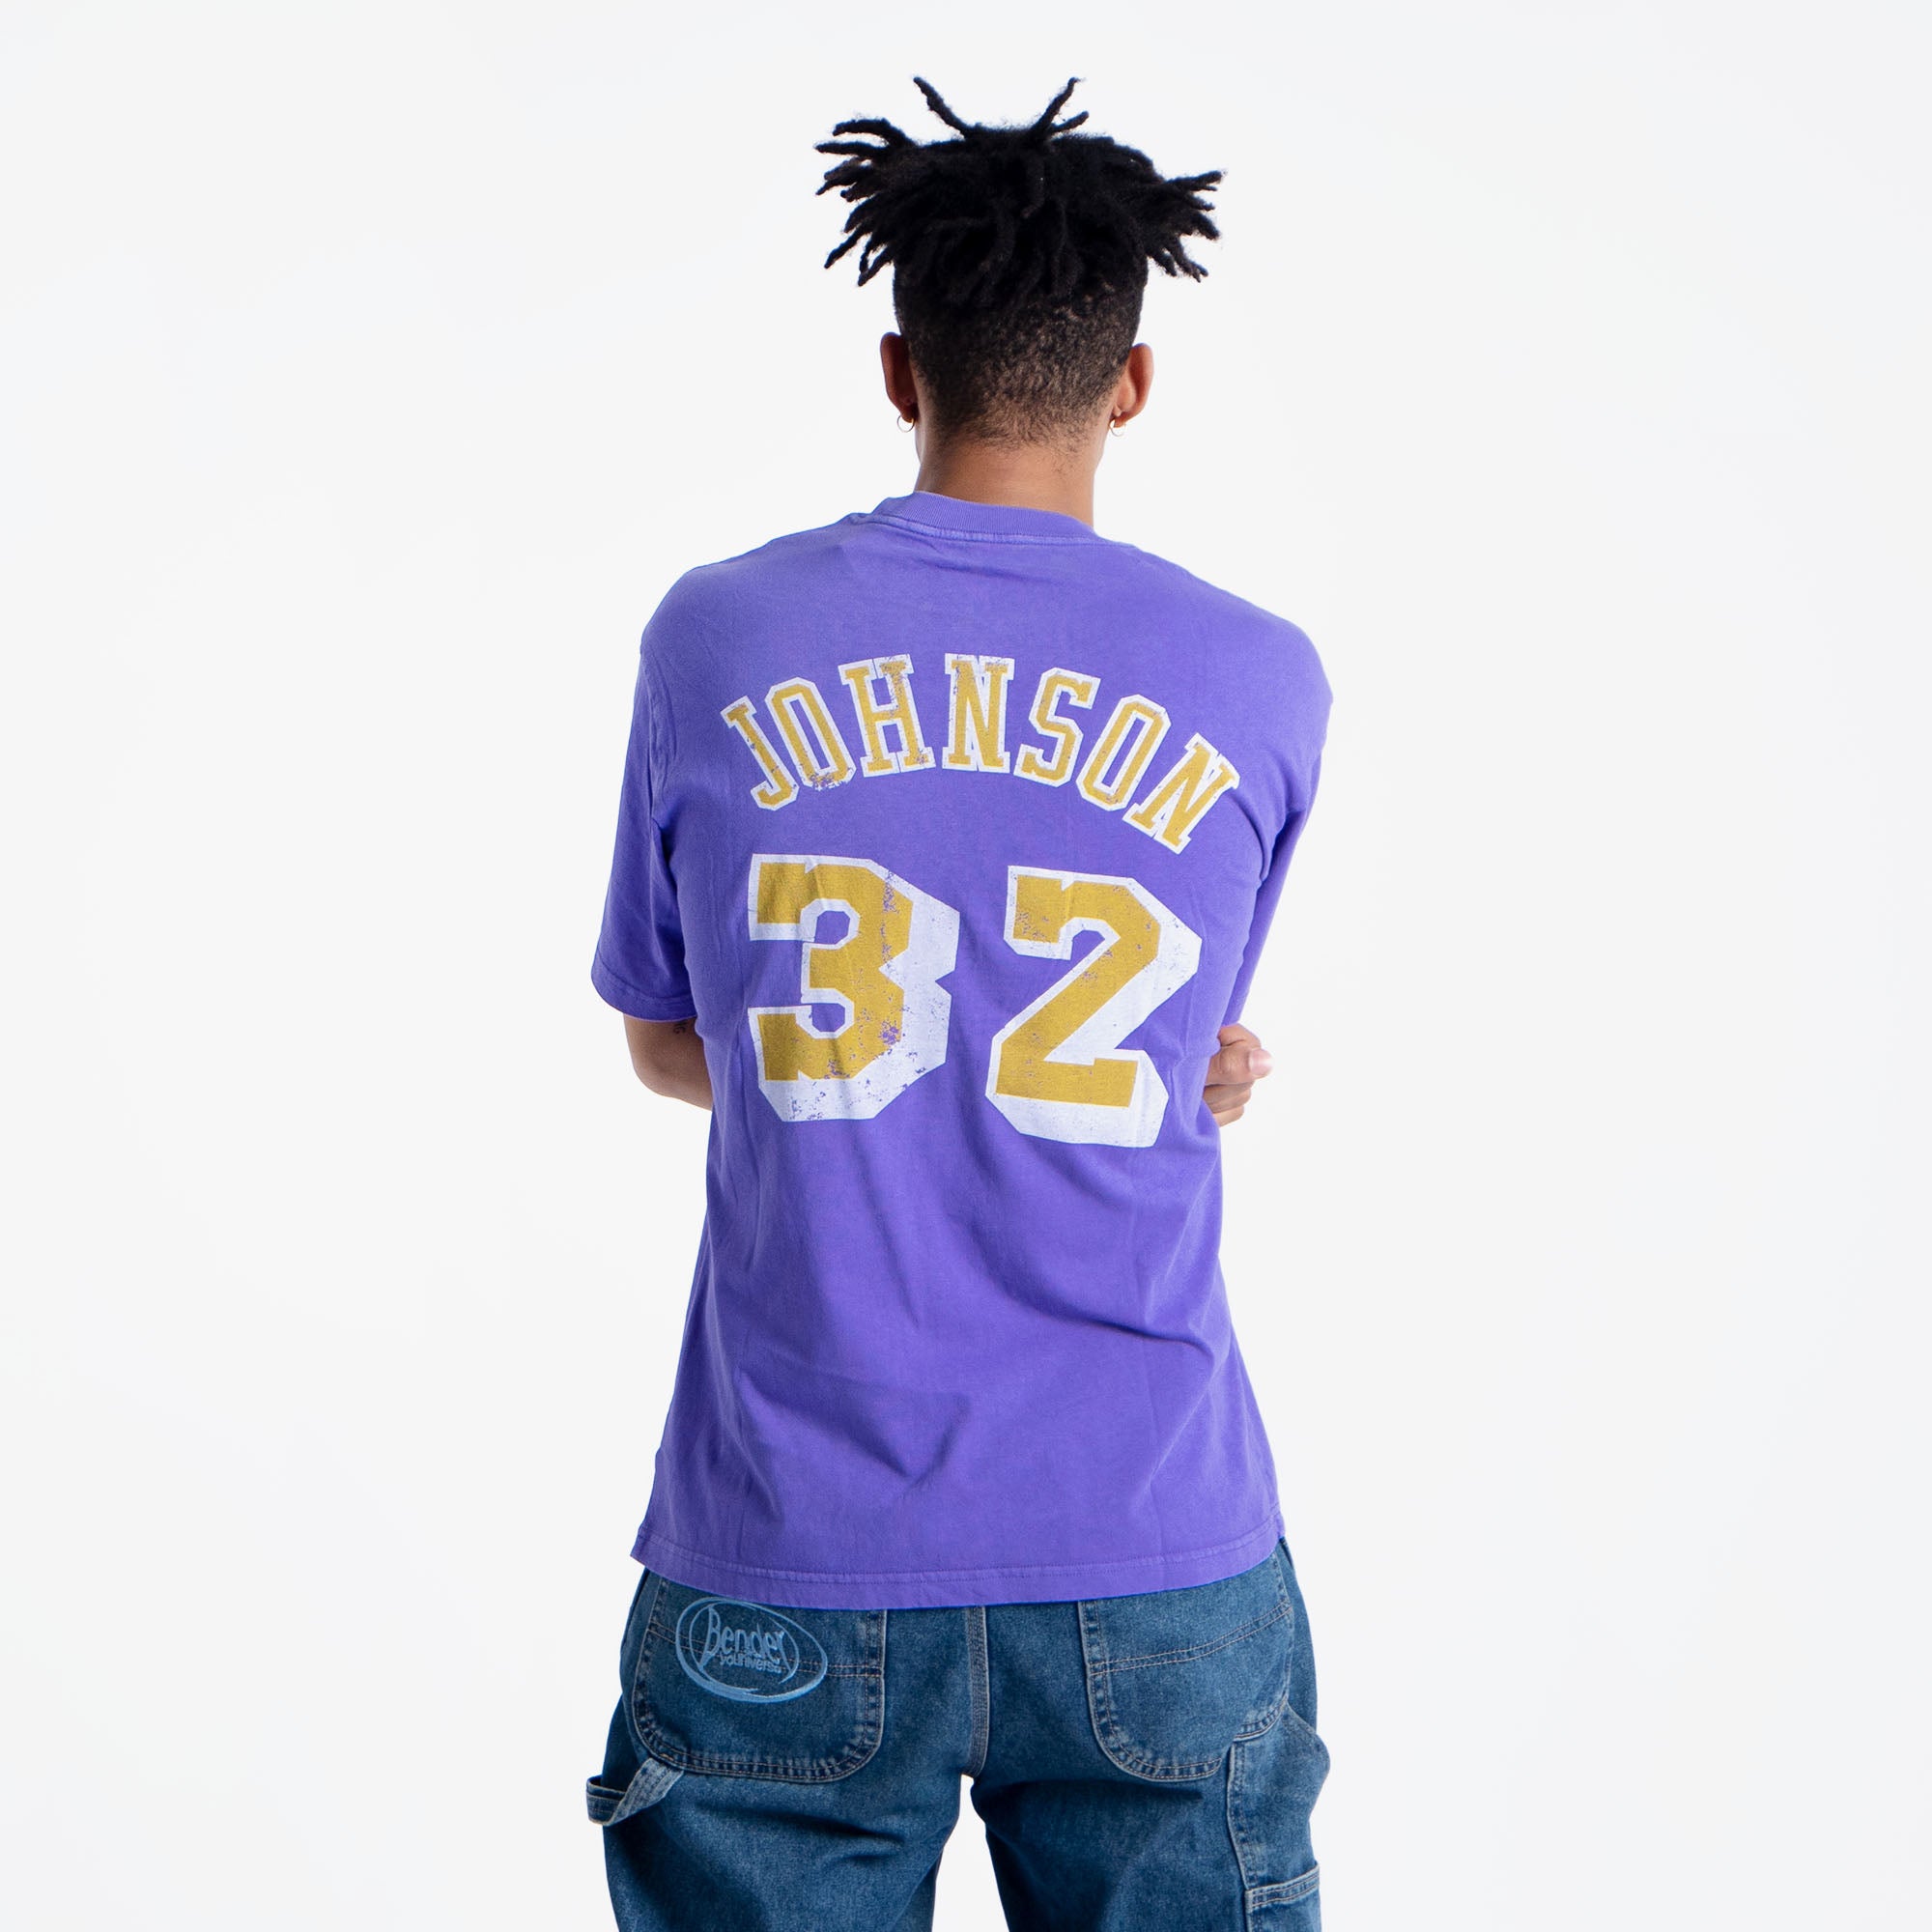 Magic Johnson La Lakers Caricature Shirt - High-Quality Printed Brand